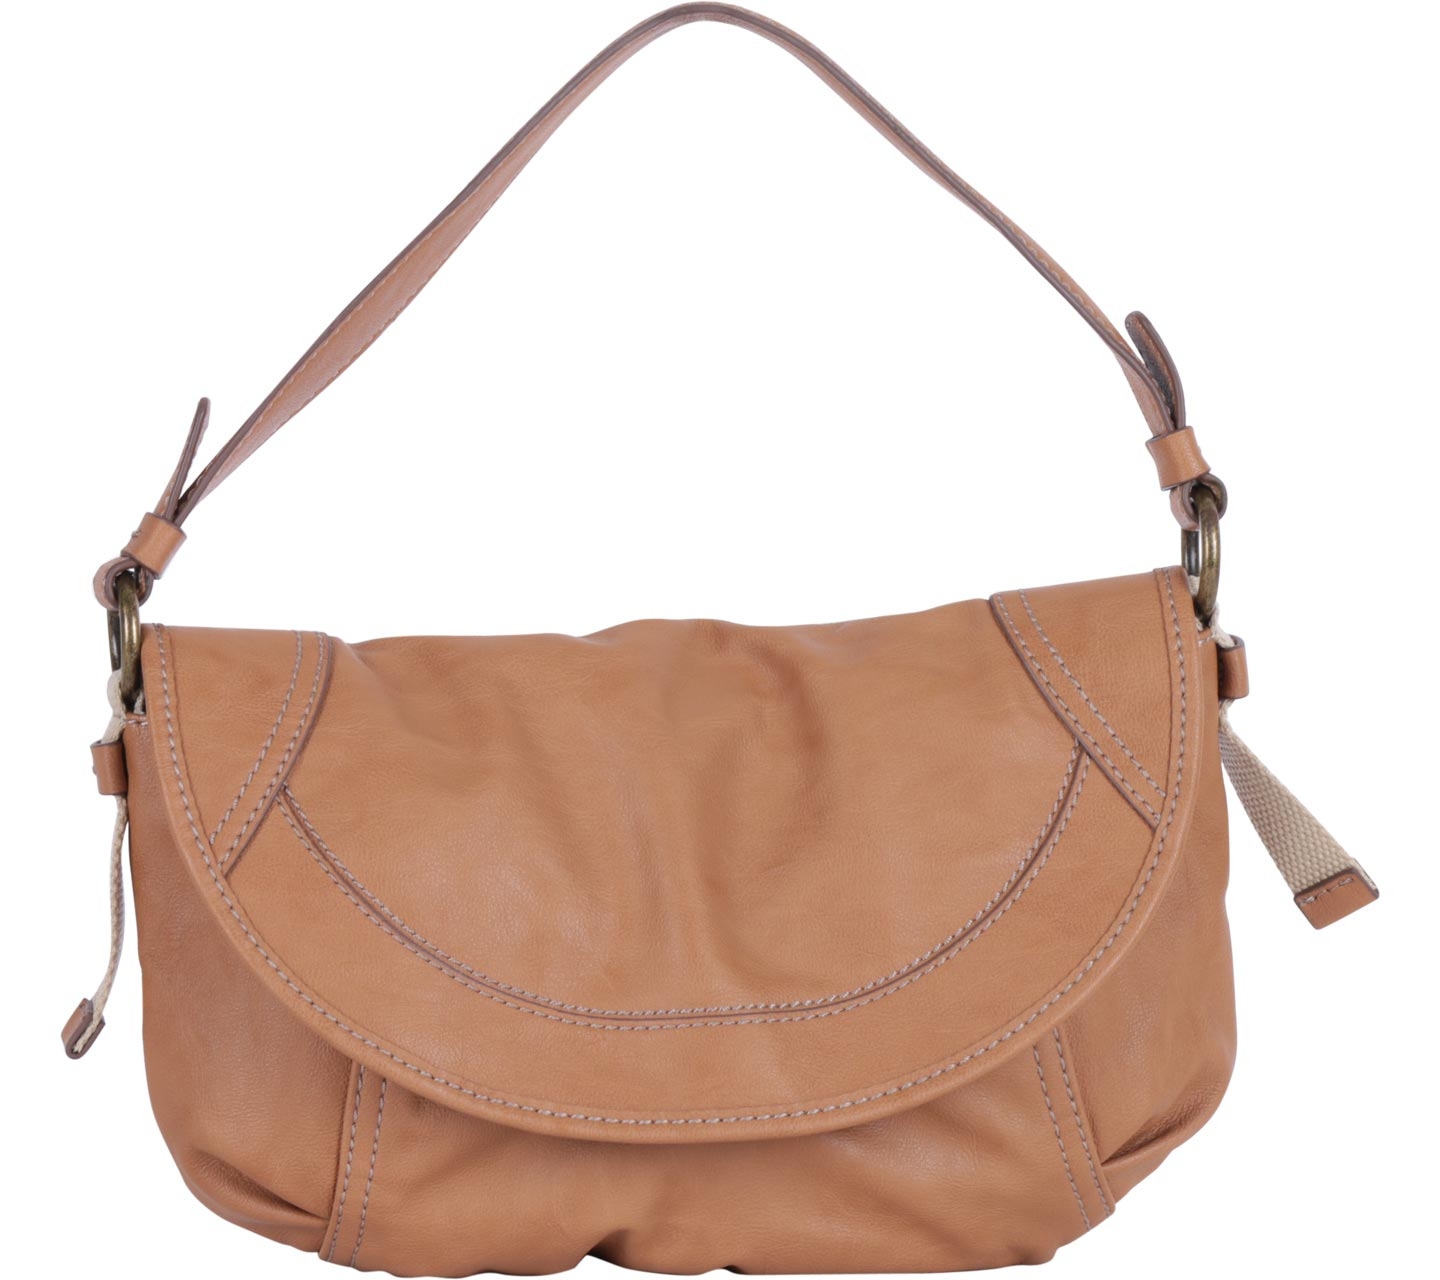 Esprit Brown Semi-Circle Leather Handbag